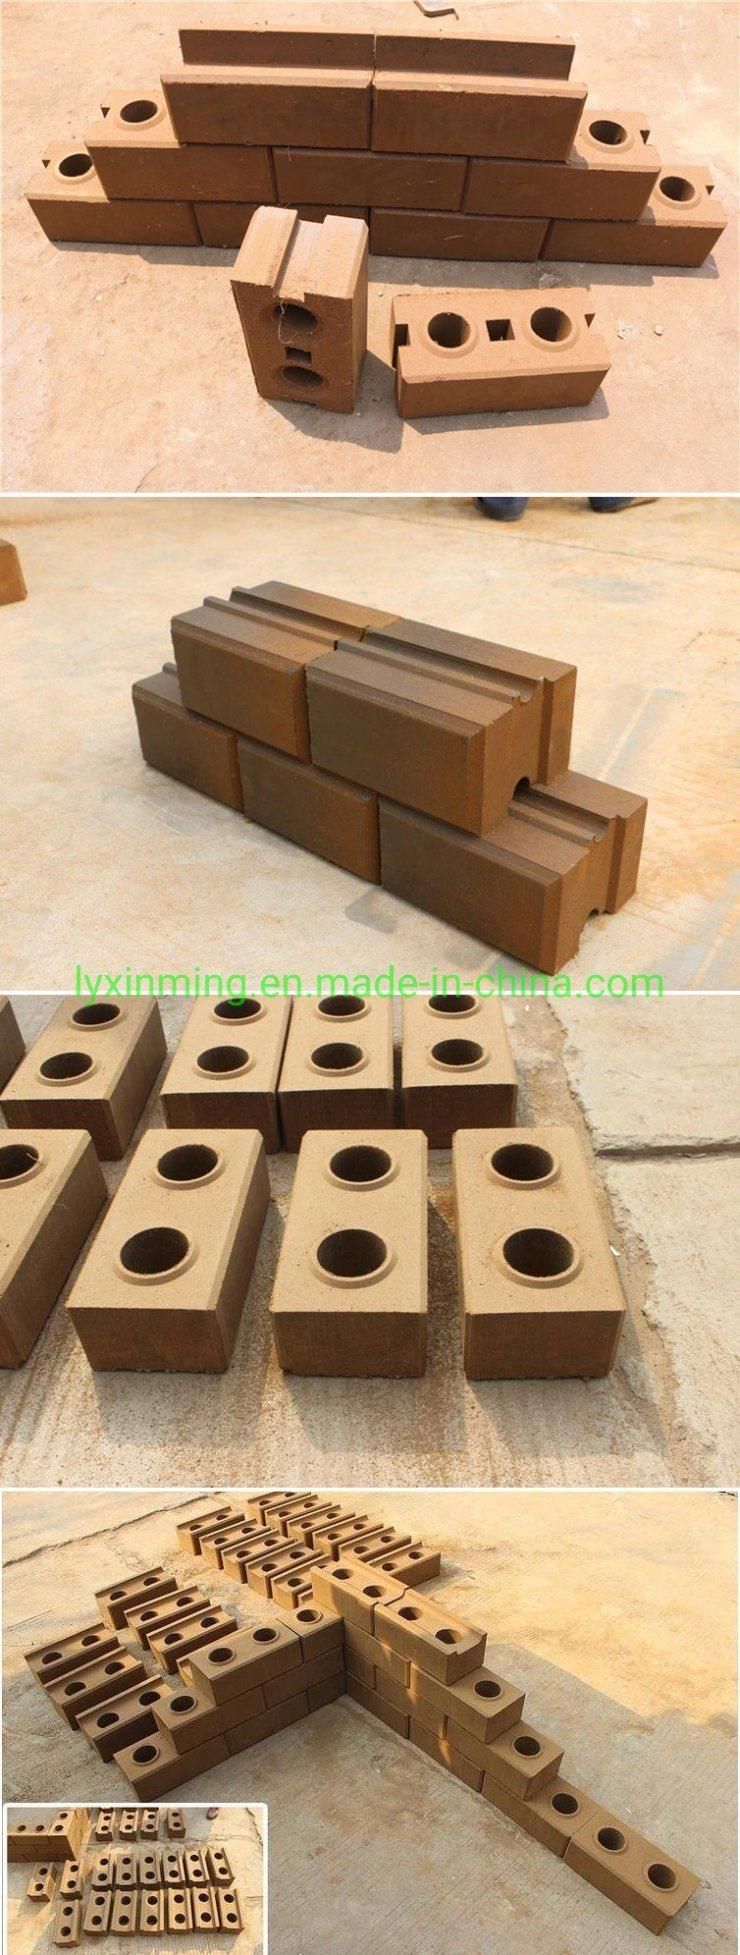 Manual Xm2-40 Block Brick Making Machine Soil Brick Machine with Good Quality